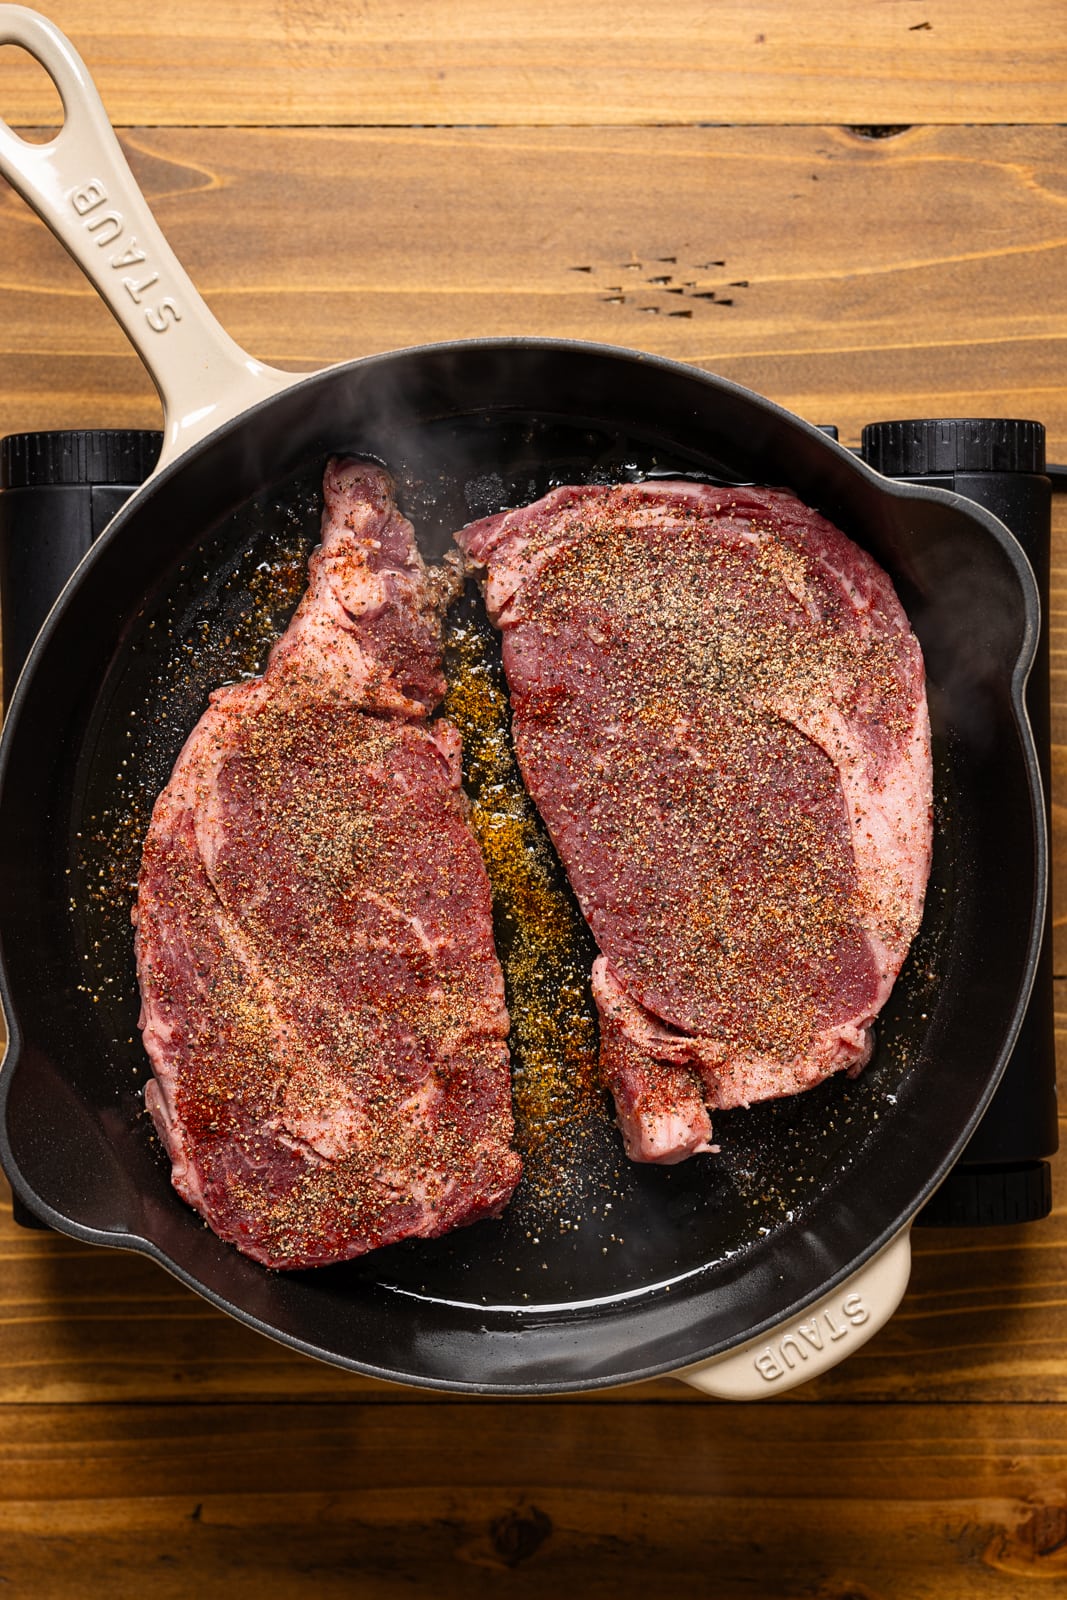 Steak fillets in a skillet over a stove top.